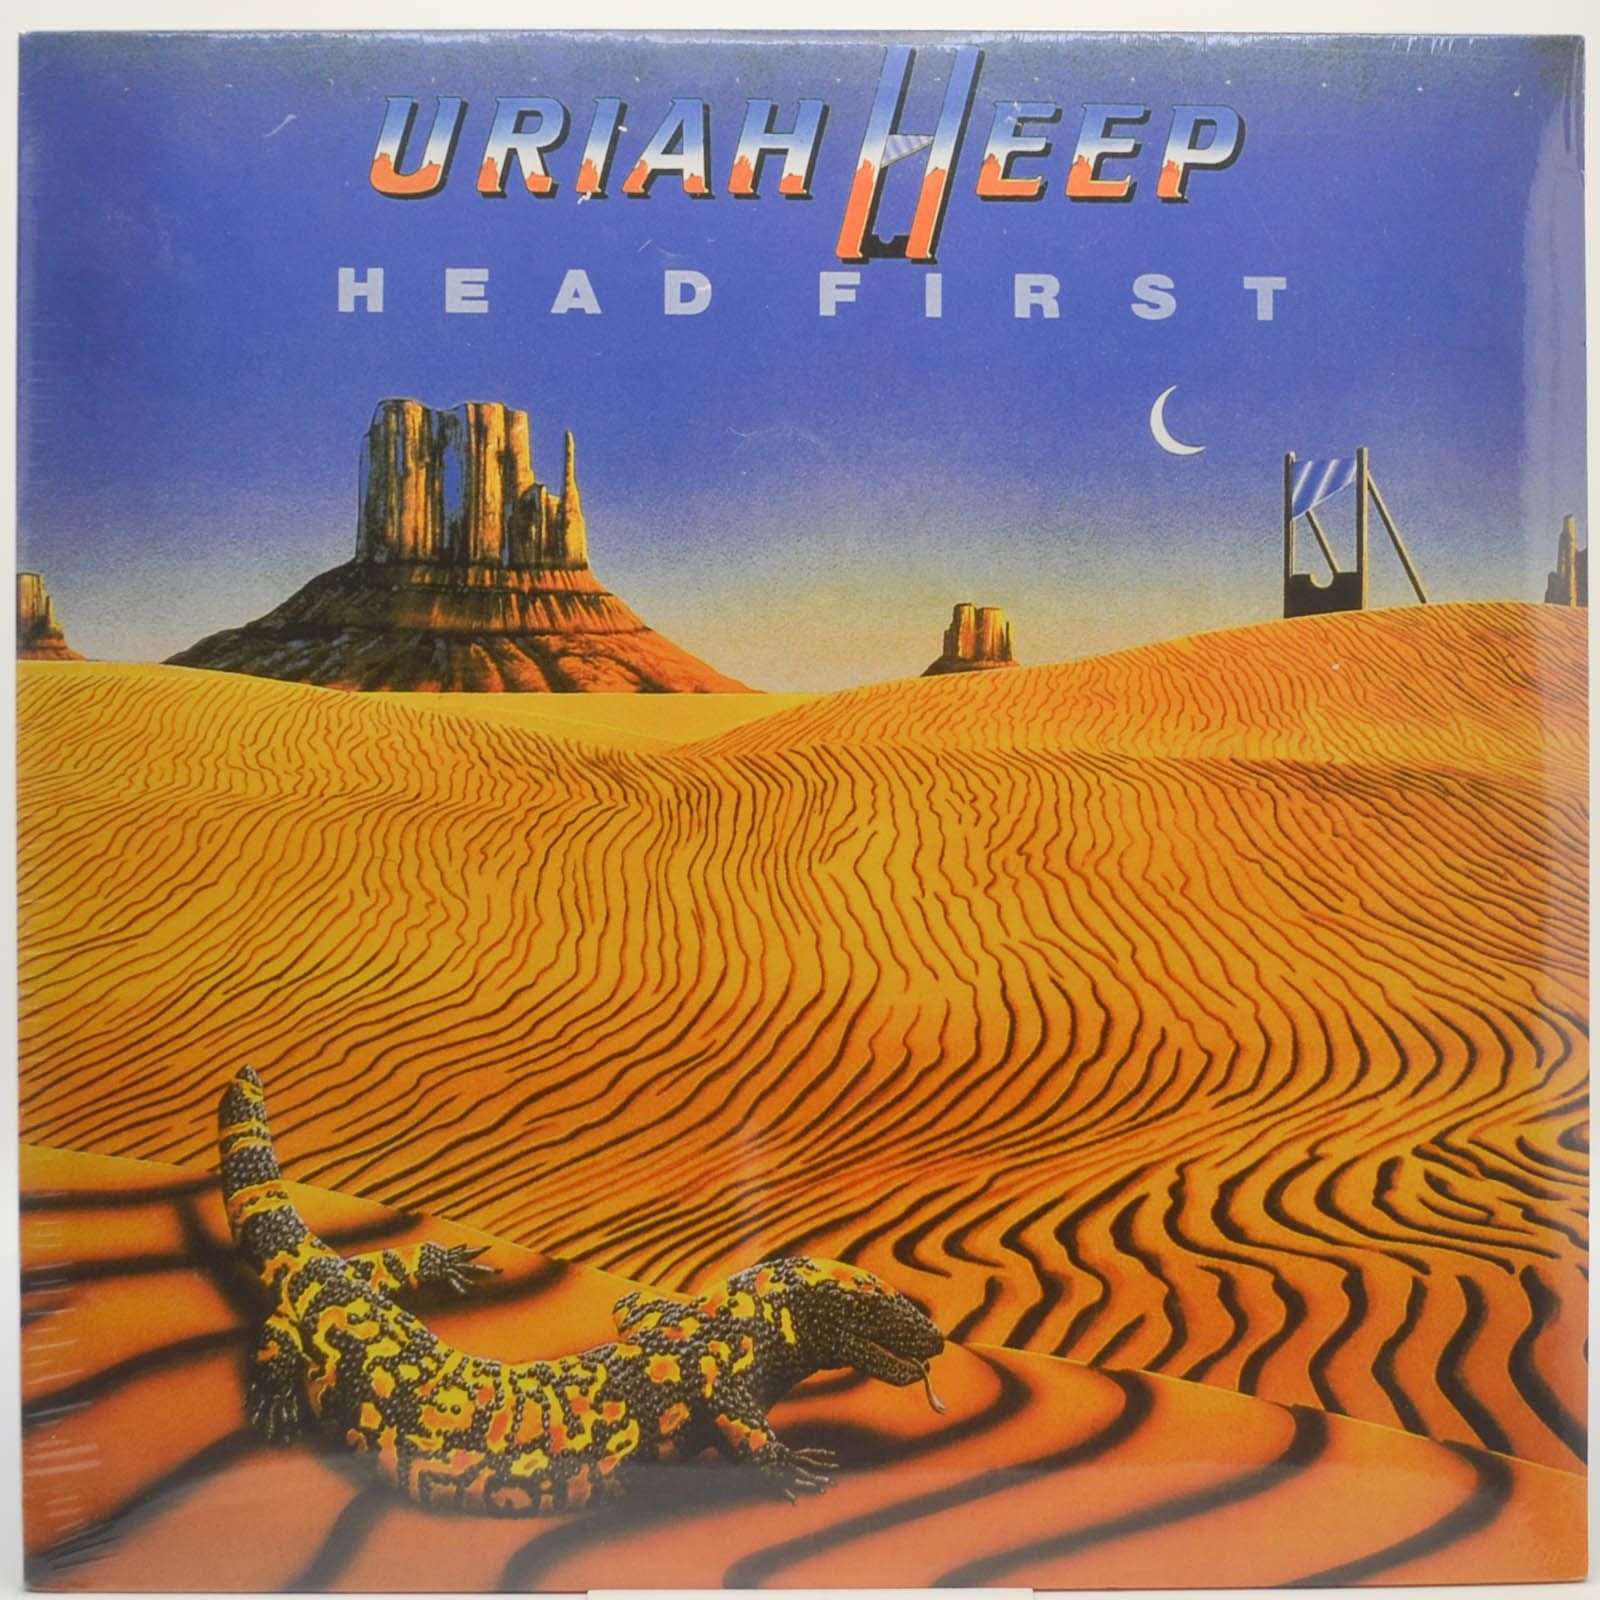 Uriah Heep — Head First (UK), 1983